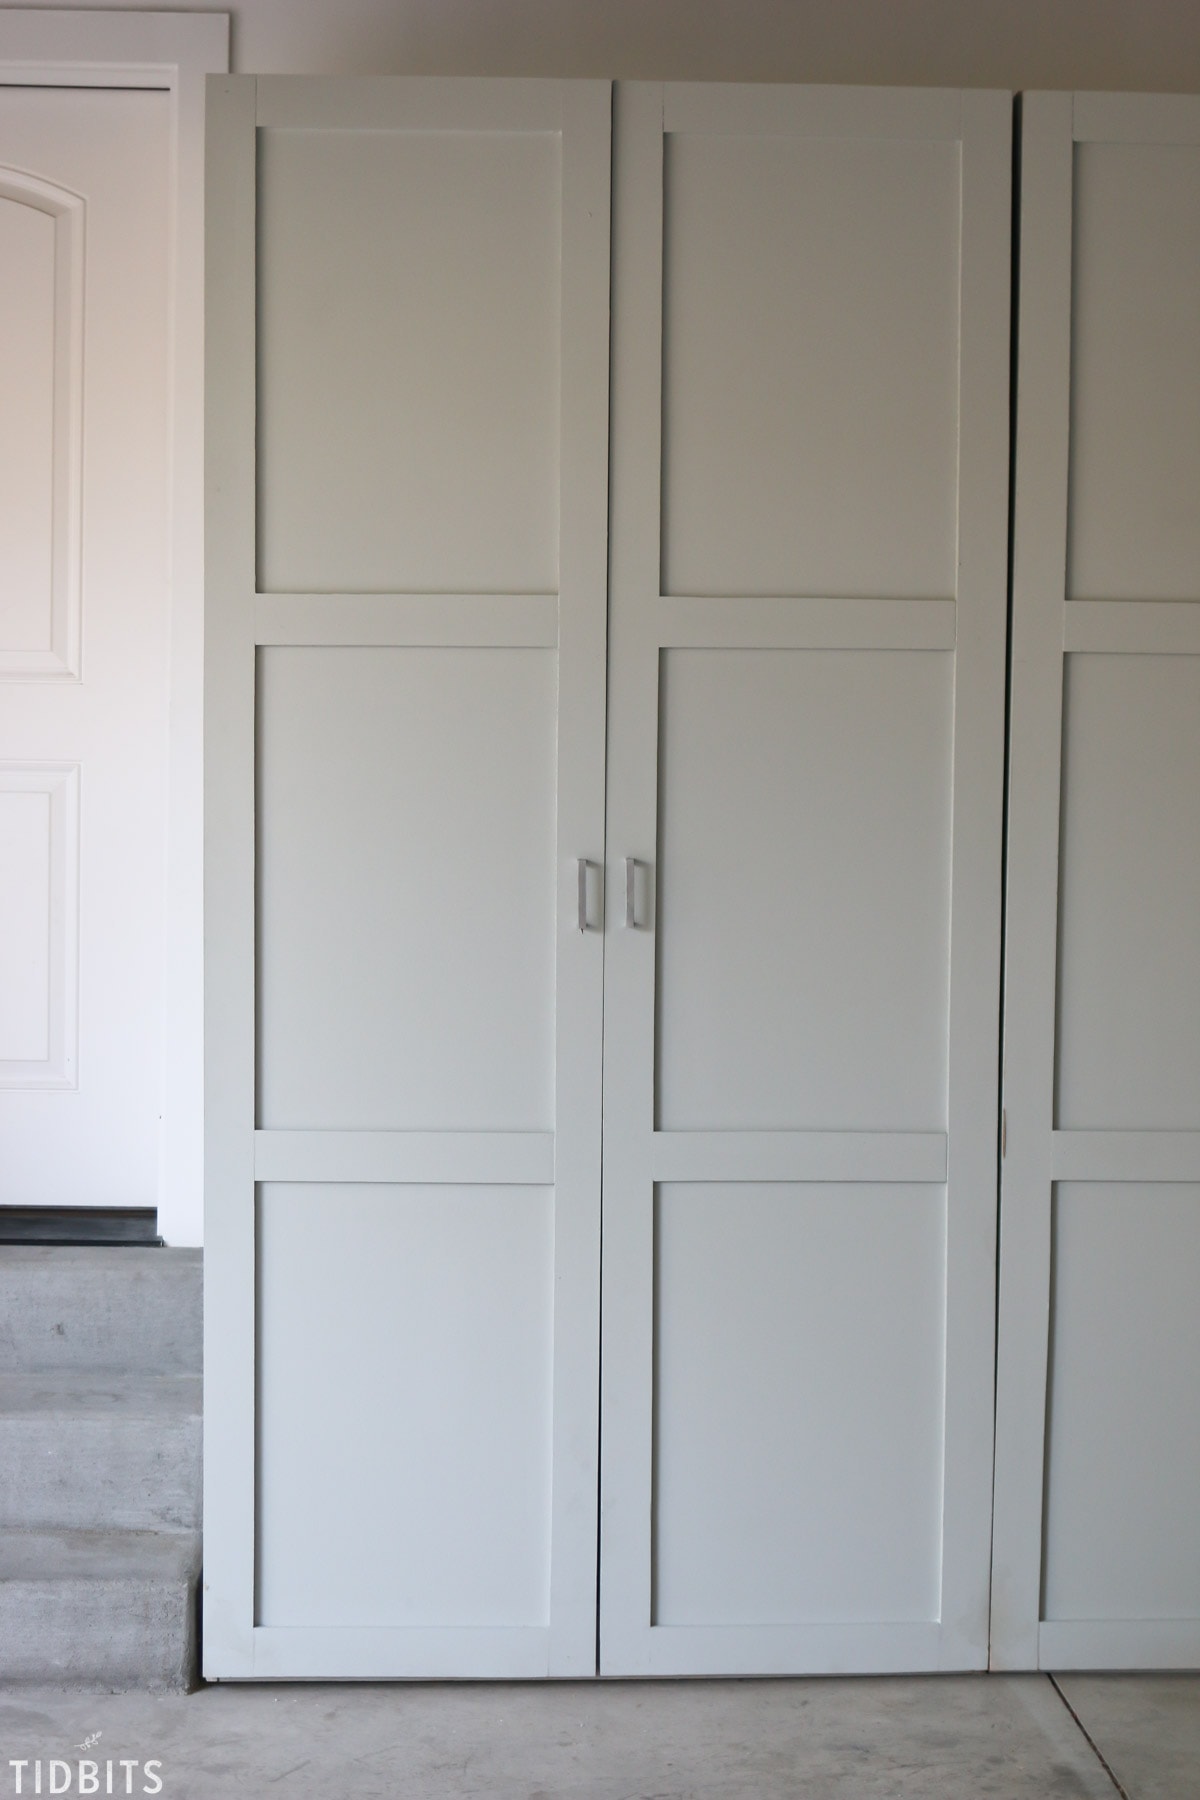 Garage Storage Cabinets Free Building, Storage Unit For Garage With Doors